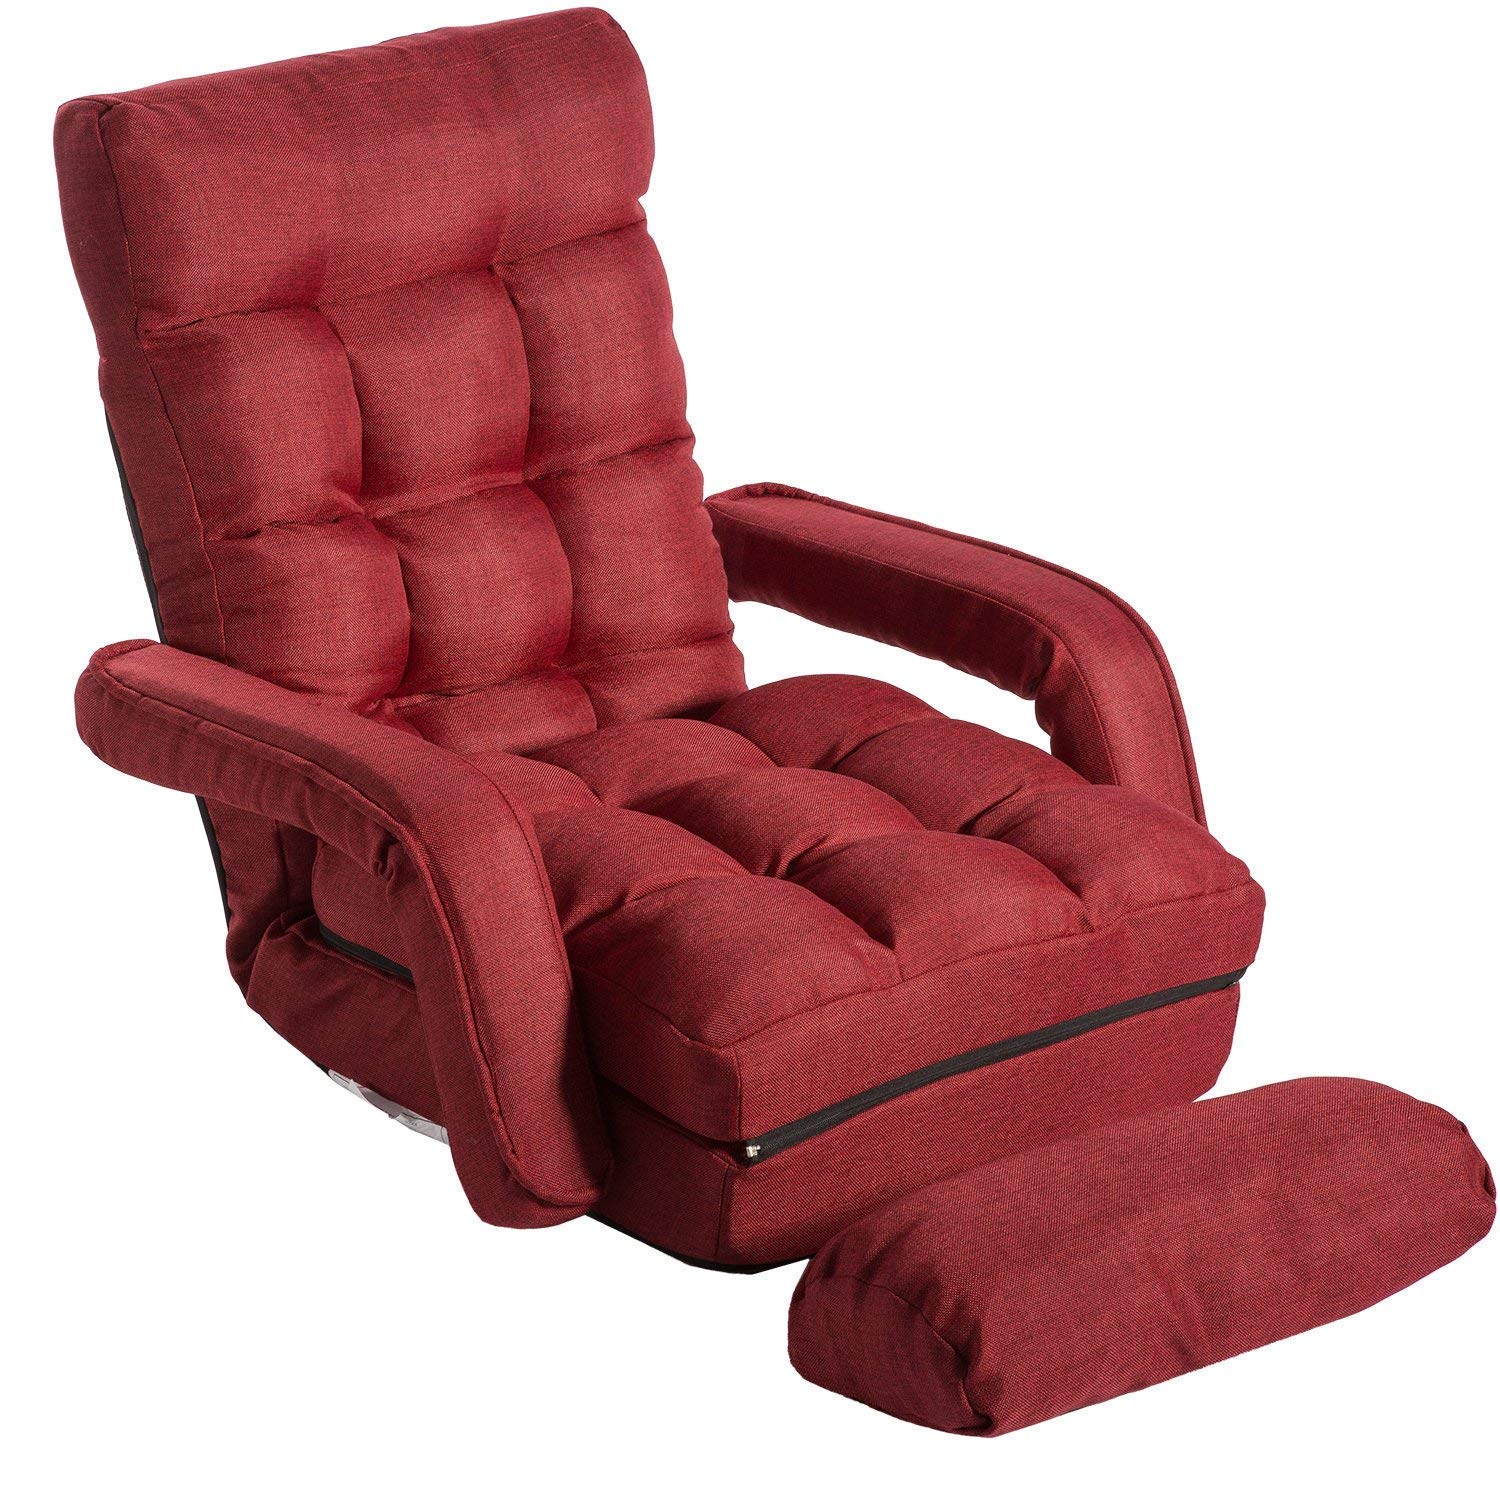 Merax Folding Lazy Floor Chair Sofa Lounger Bed